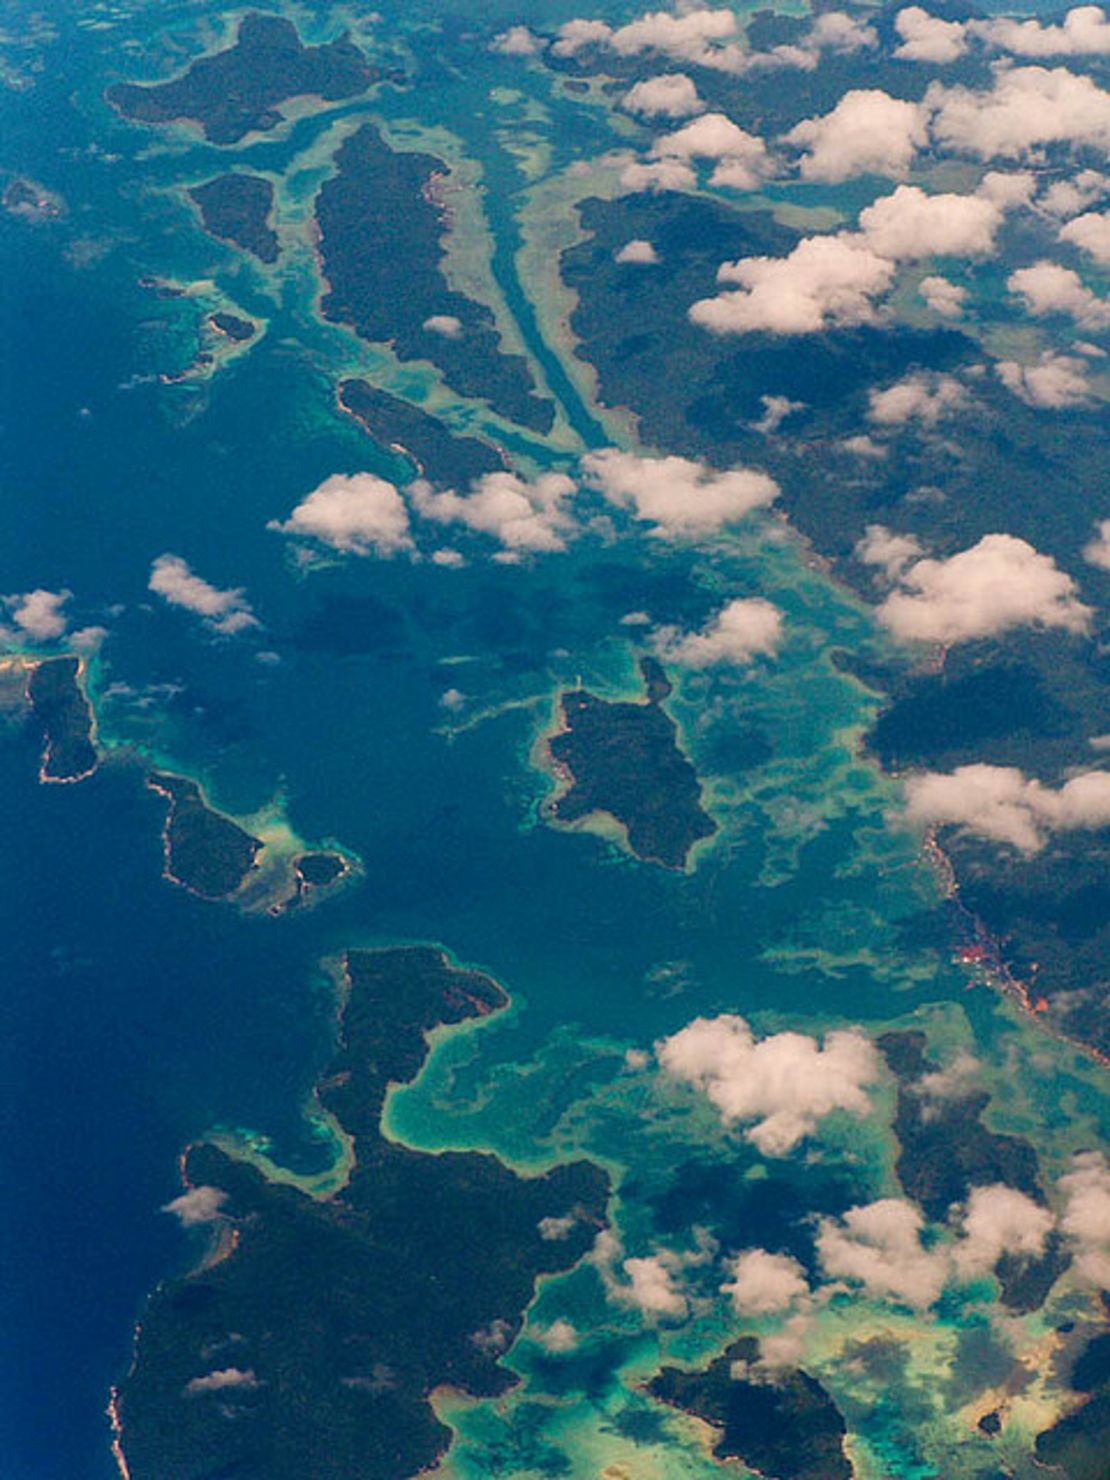 The Anambas Islands, Indonesia